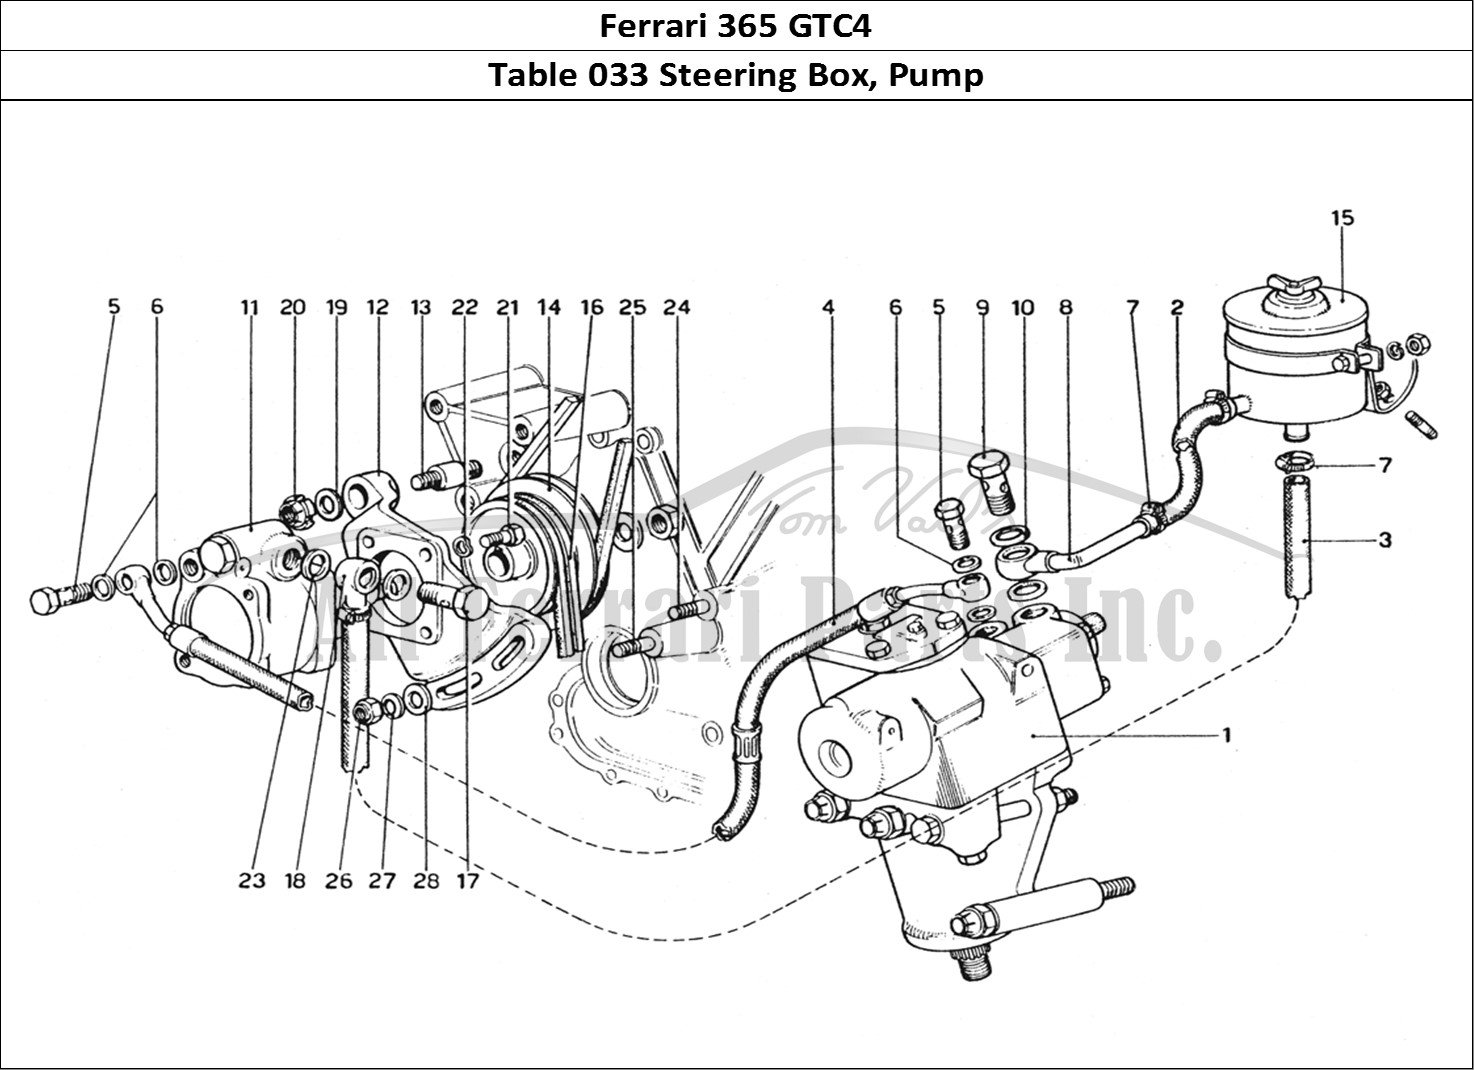 Ferrari Parts Ferrari 365 GTC4 (Mechanical) Page 033 Steering box & pump